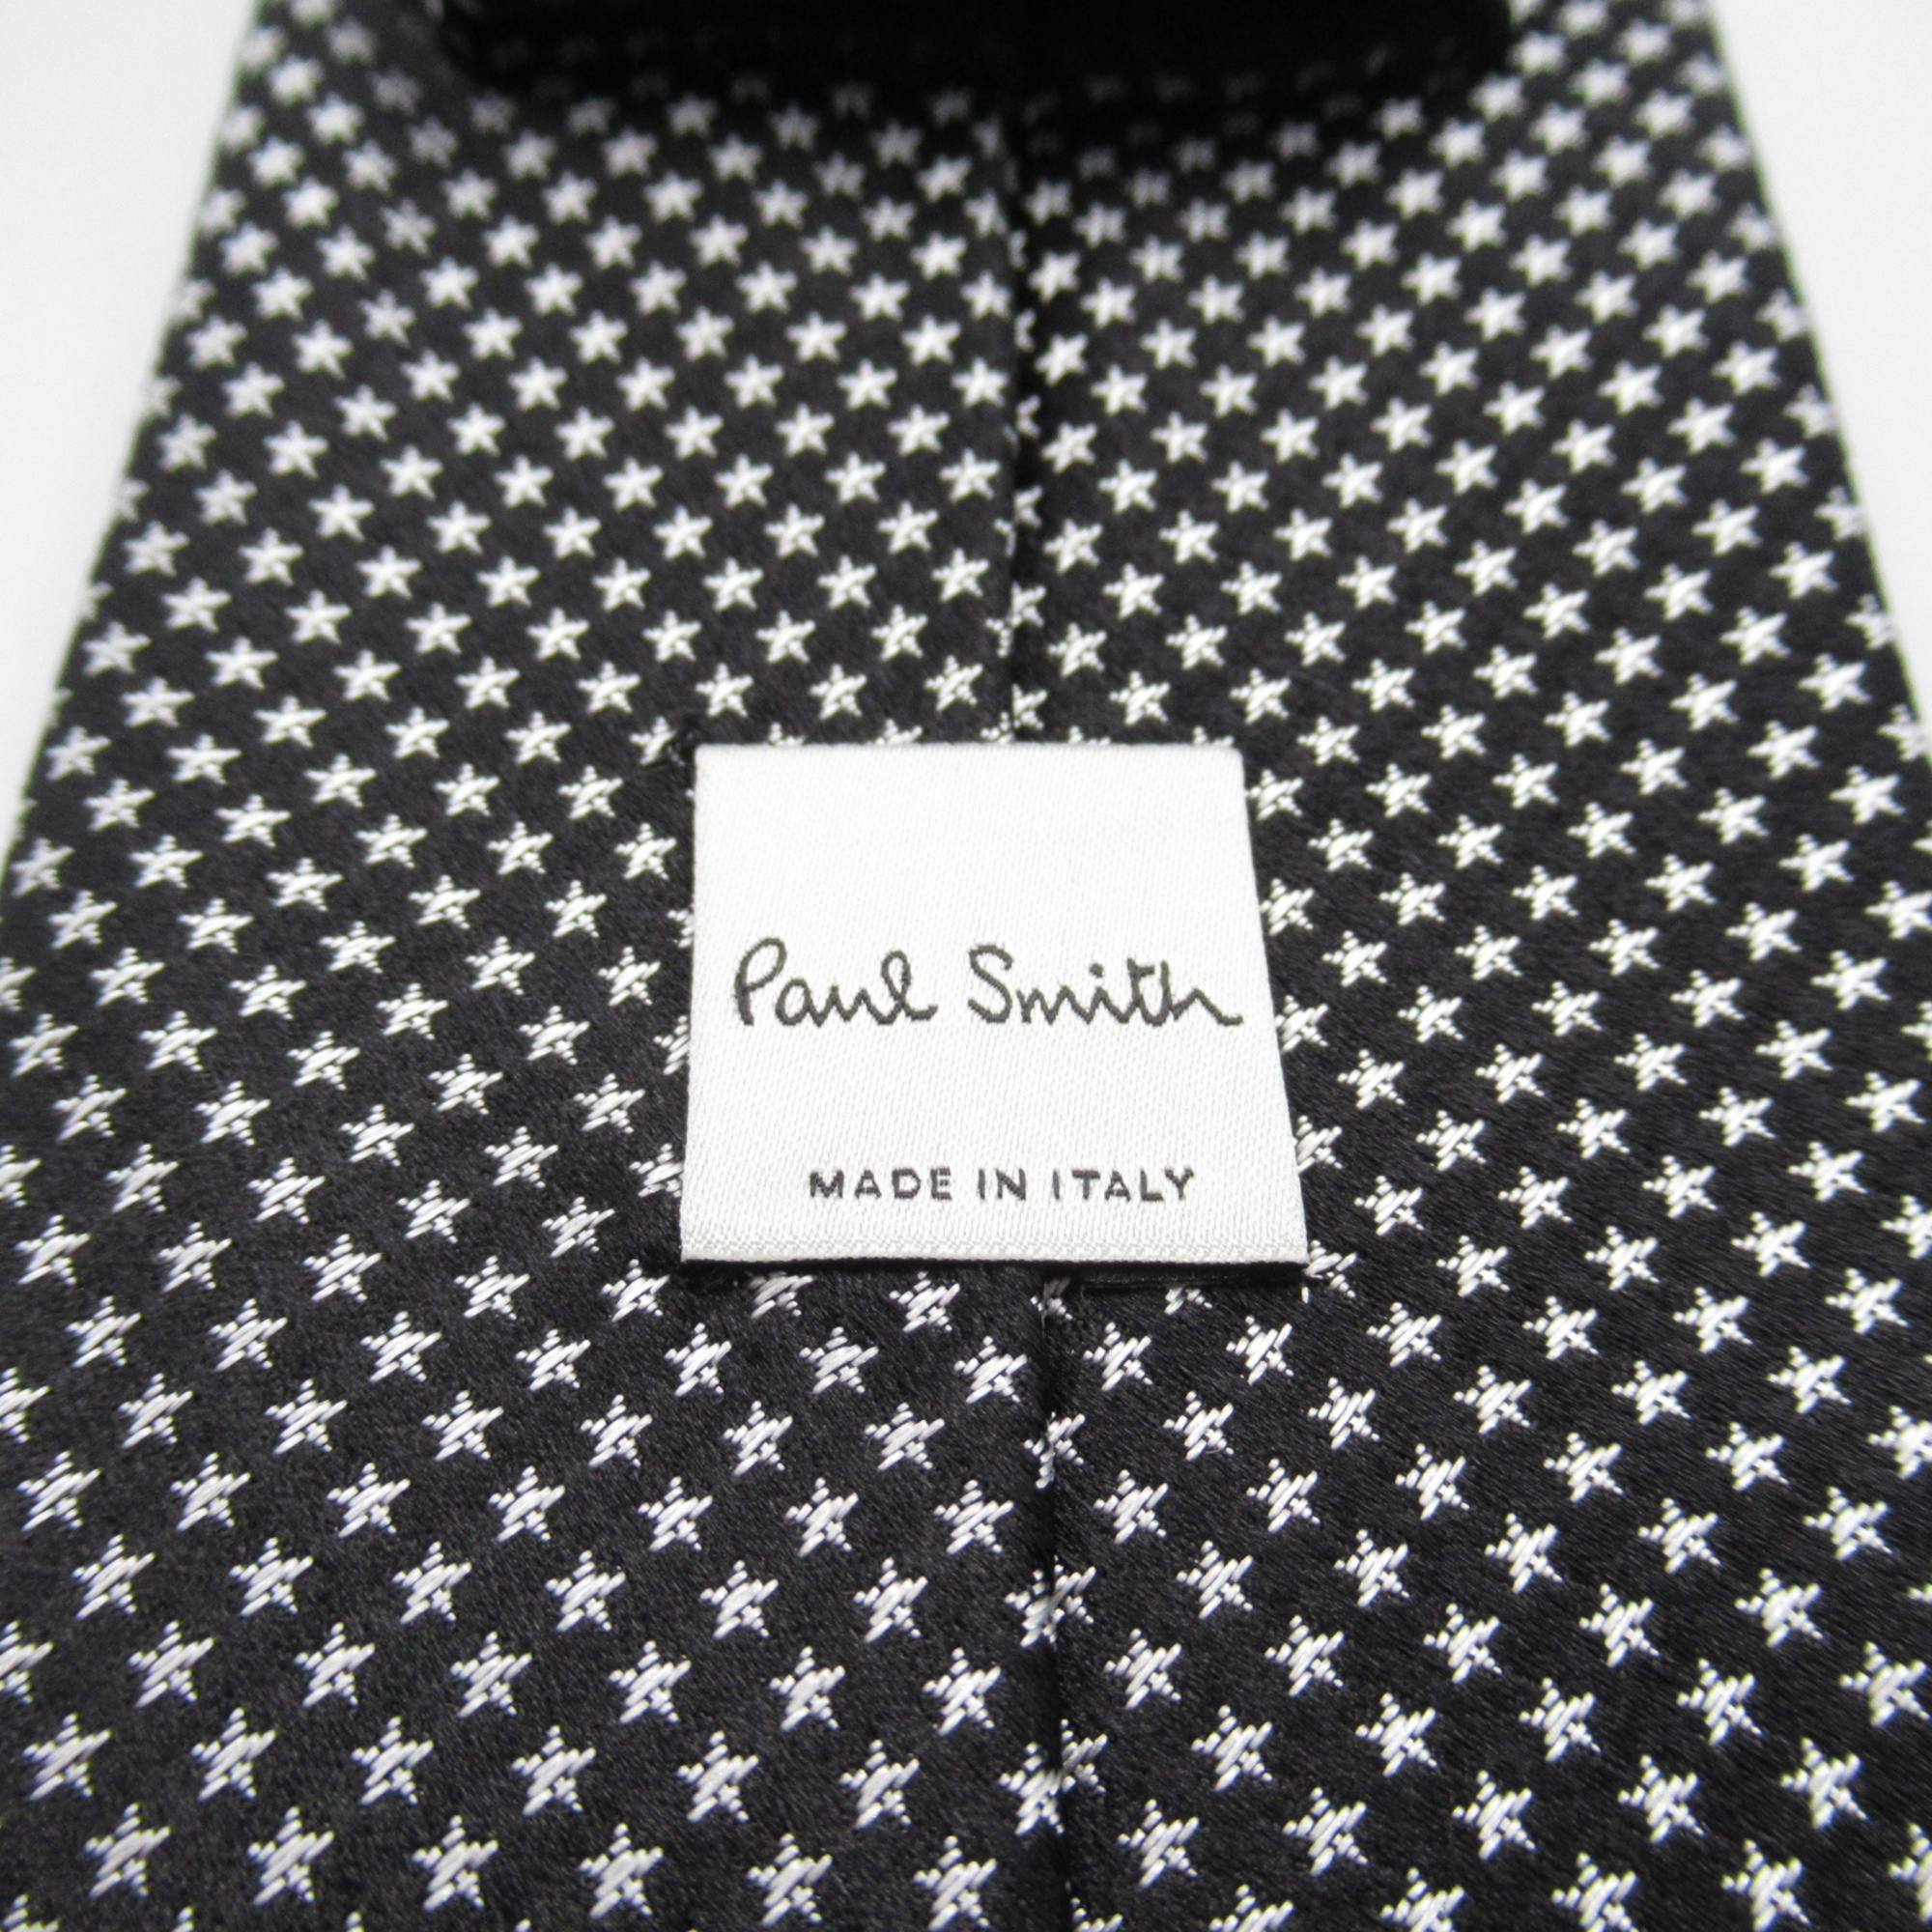 Paul Smith tie Black cotton